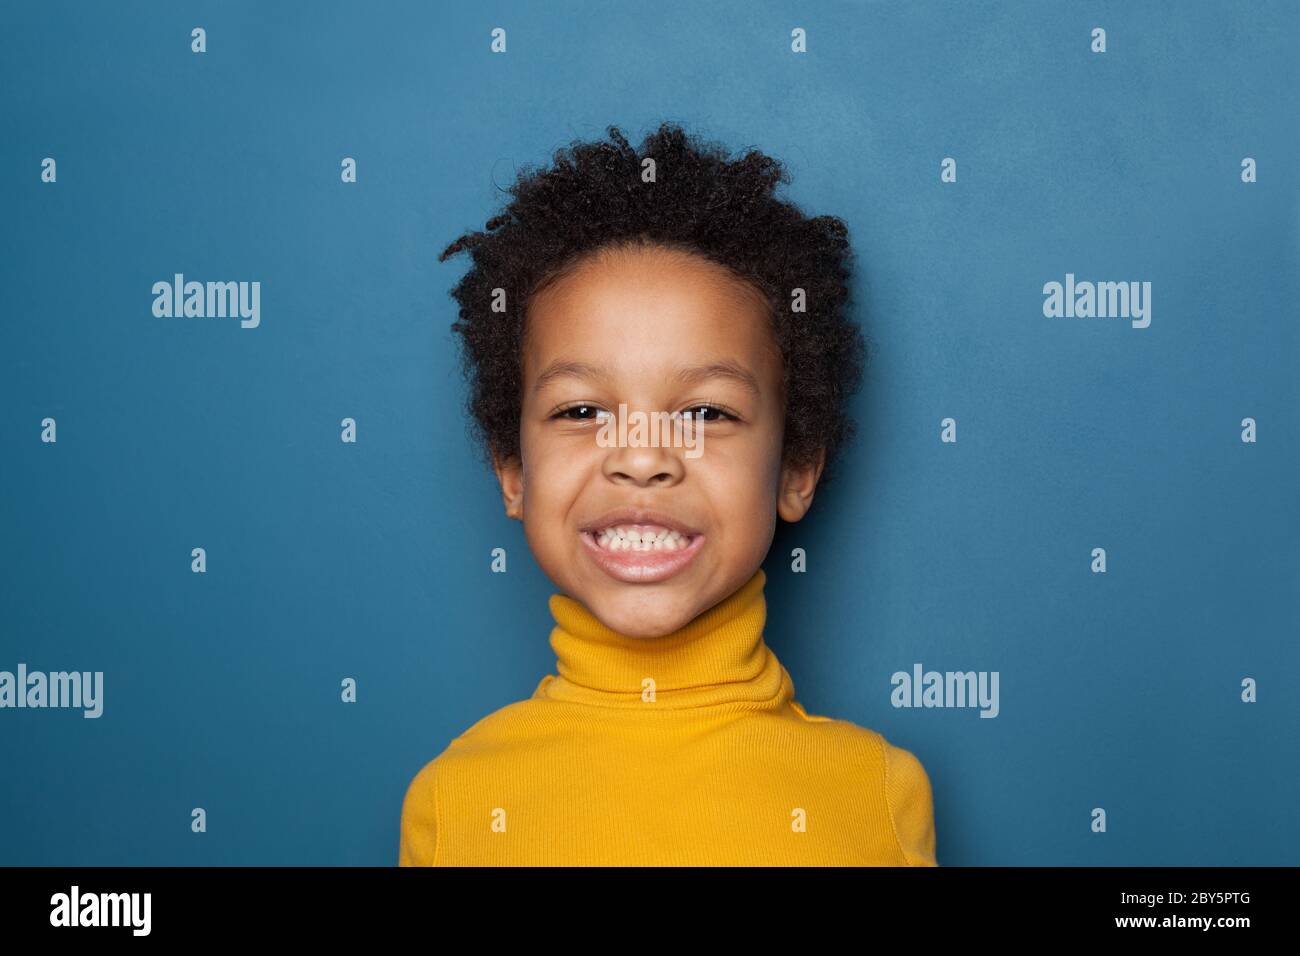 Funny black kid boy on blue background portrait Stock Photo